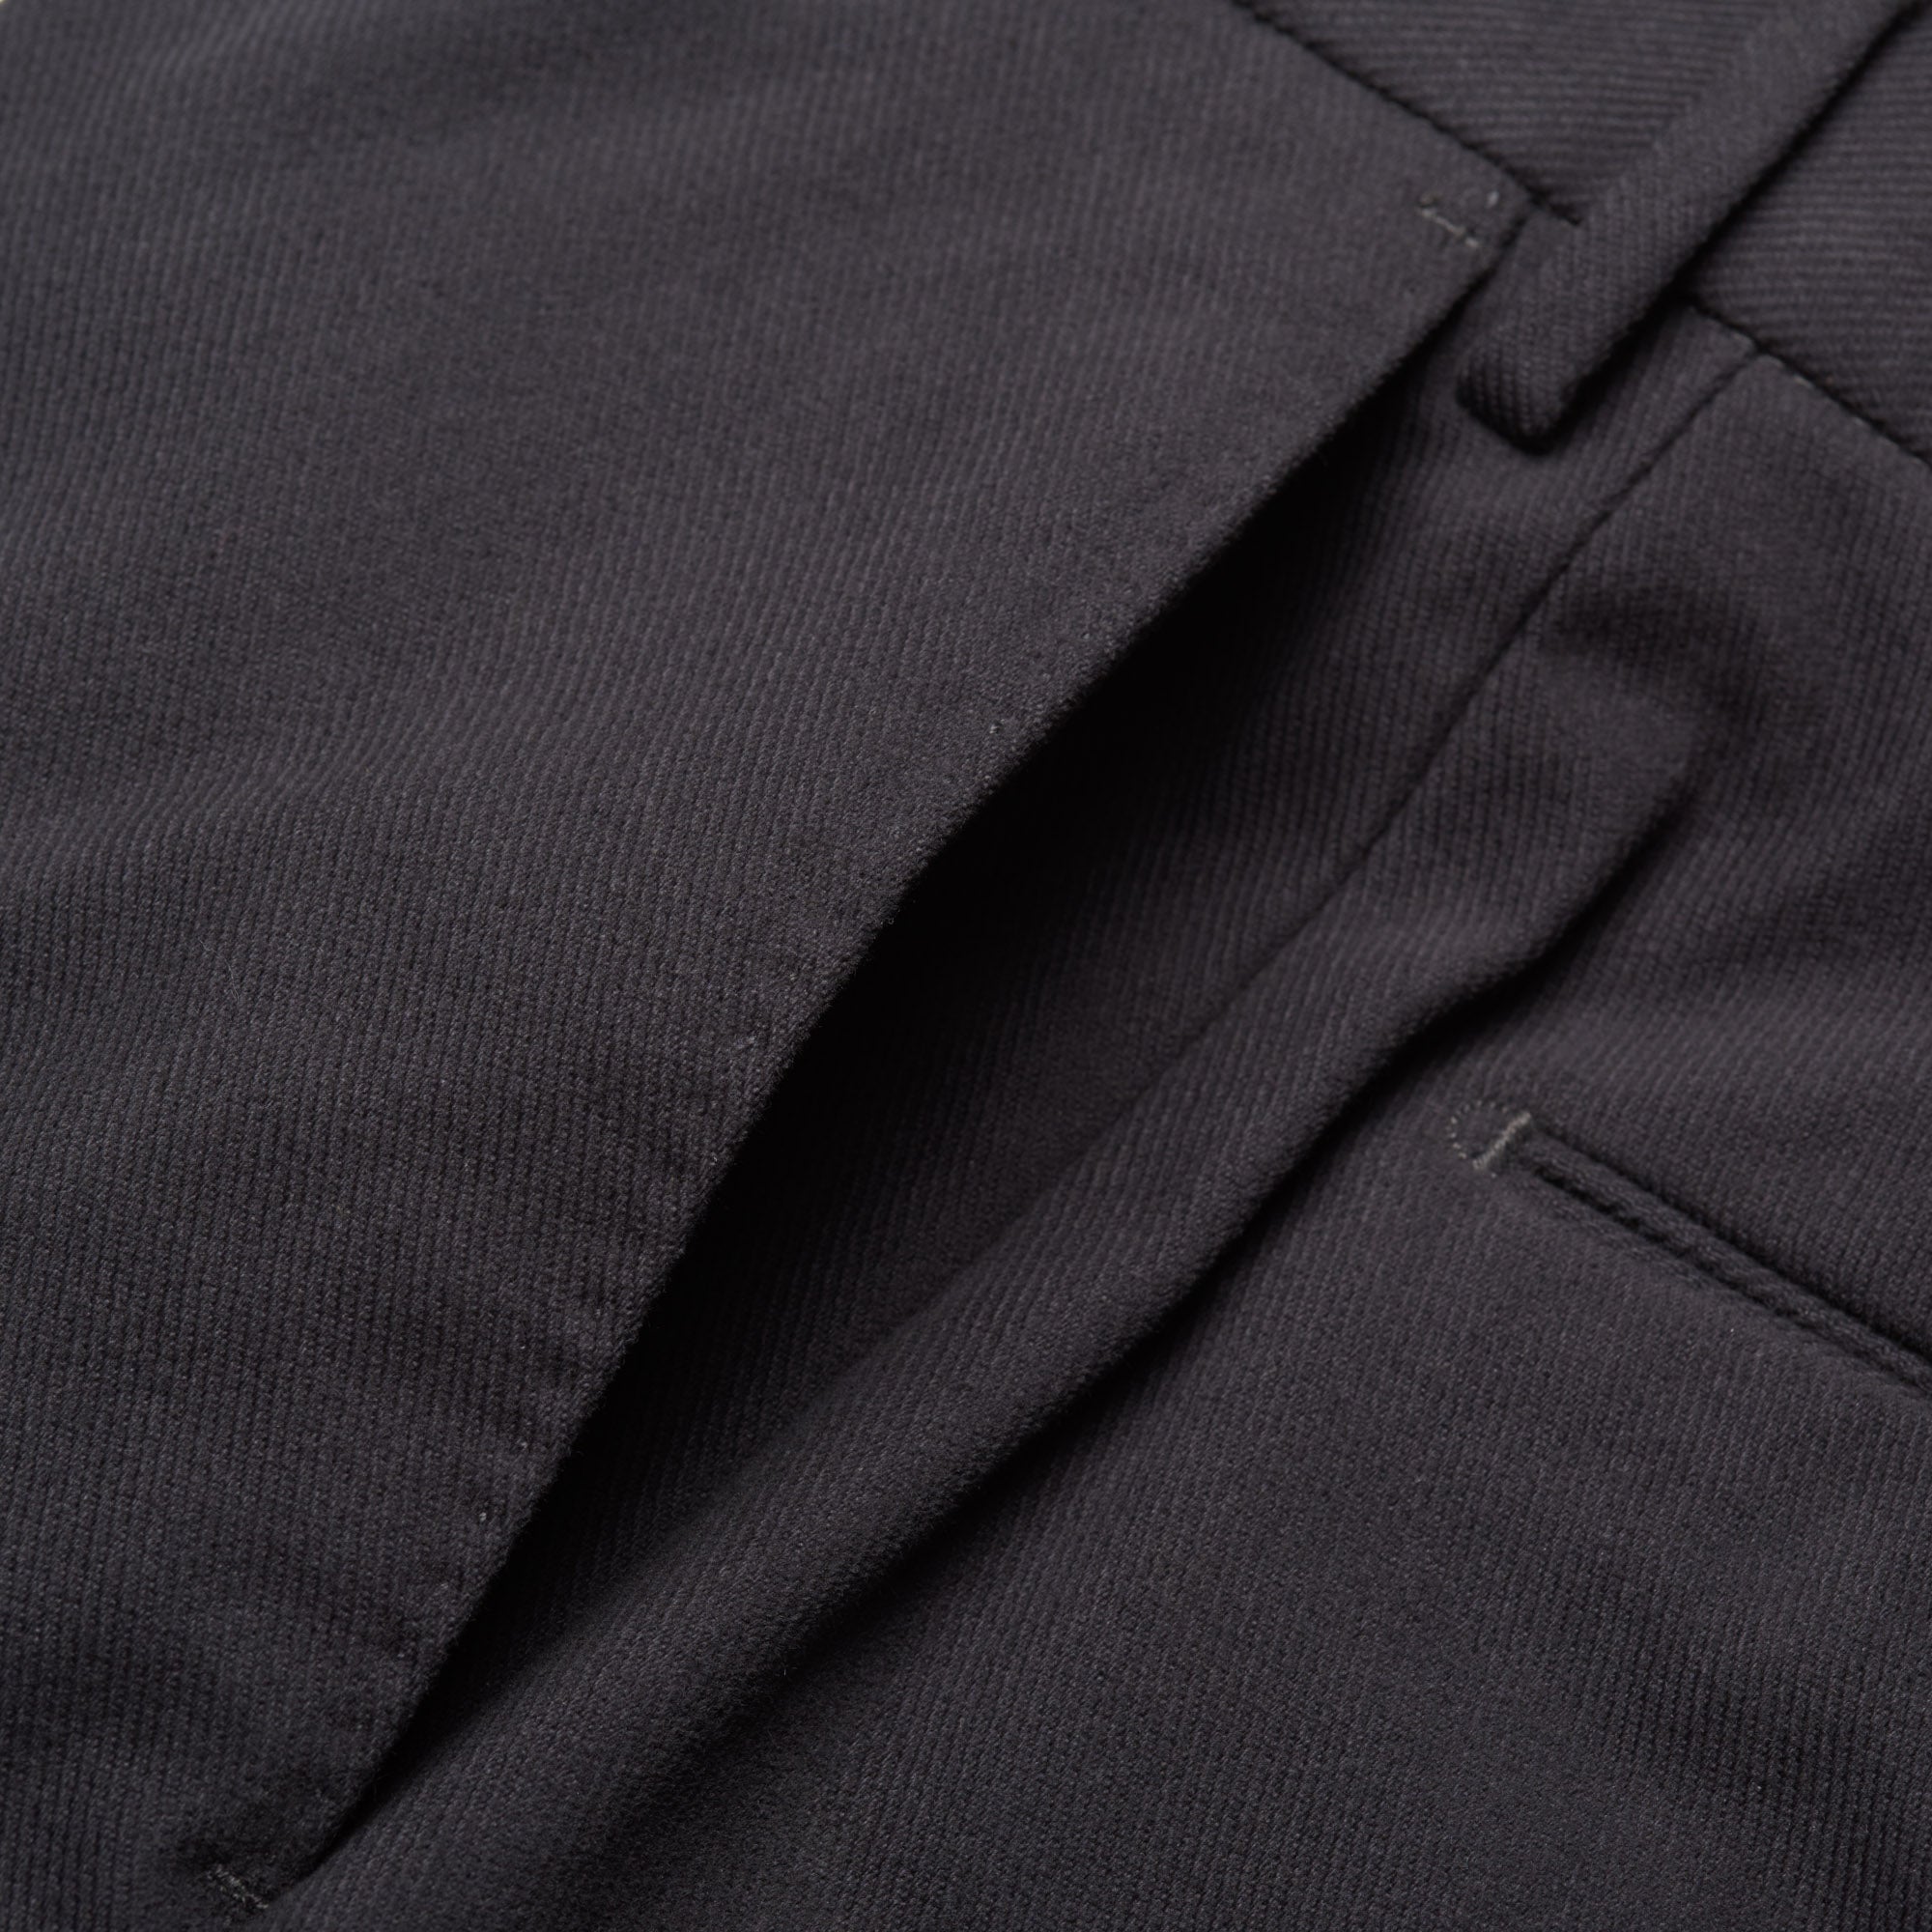 PT01 PANTALONI TORINO "Joseph" Dark Gray Twill Cotton Flat Front Pants NEW